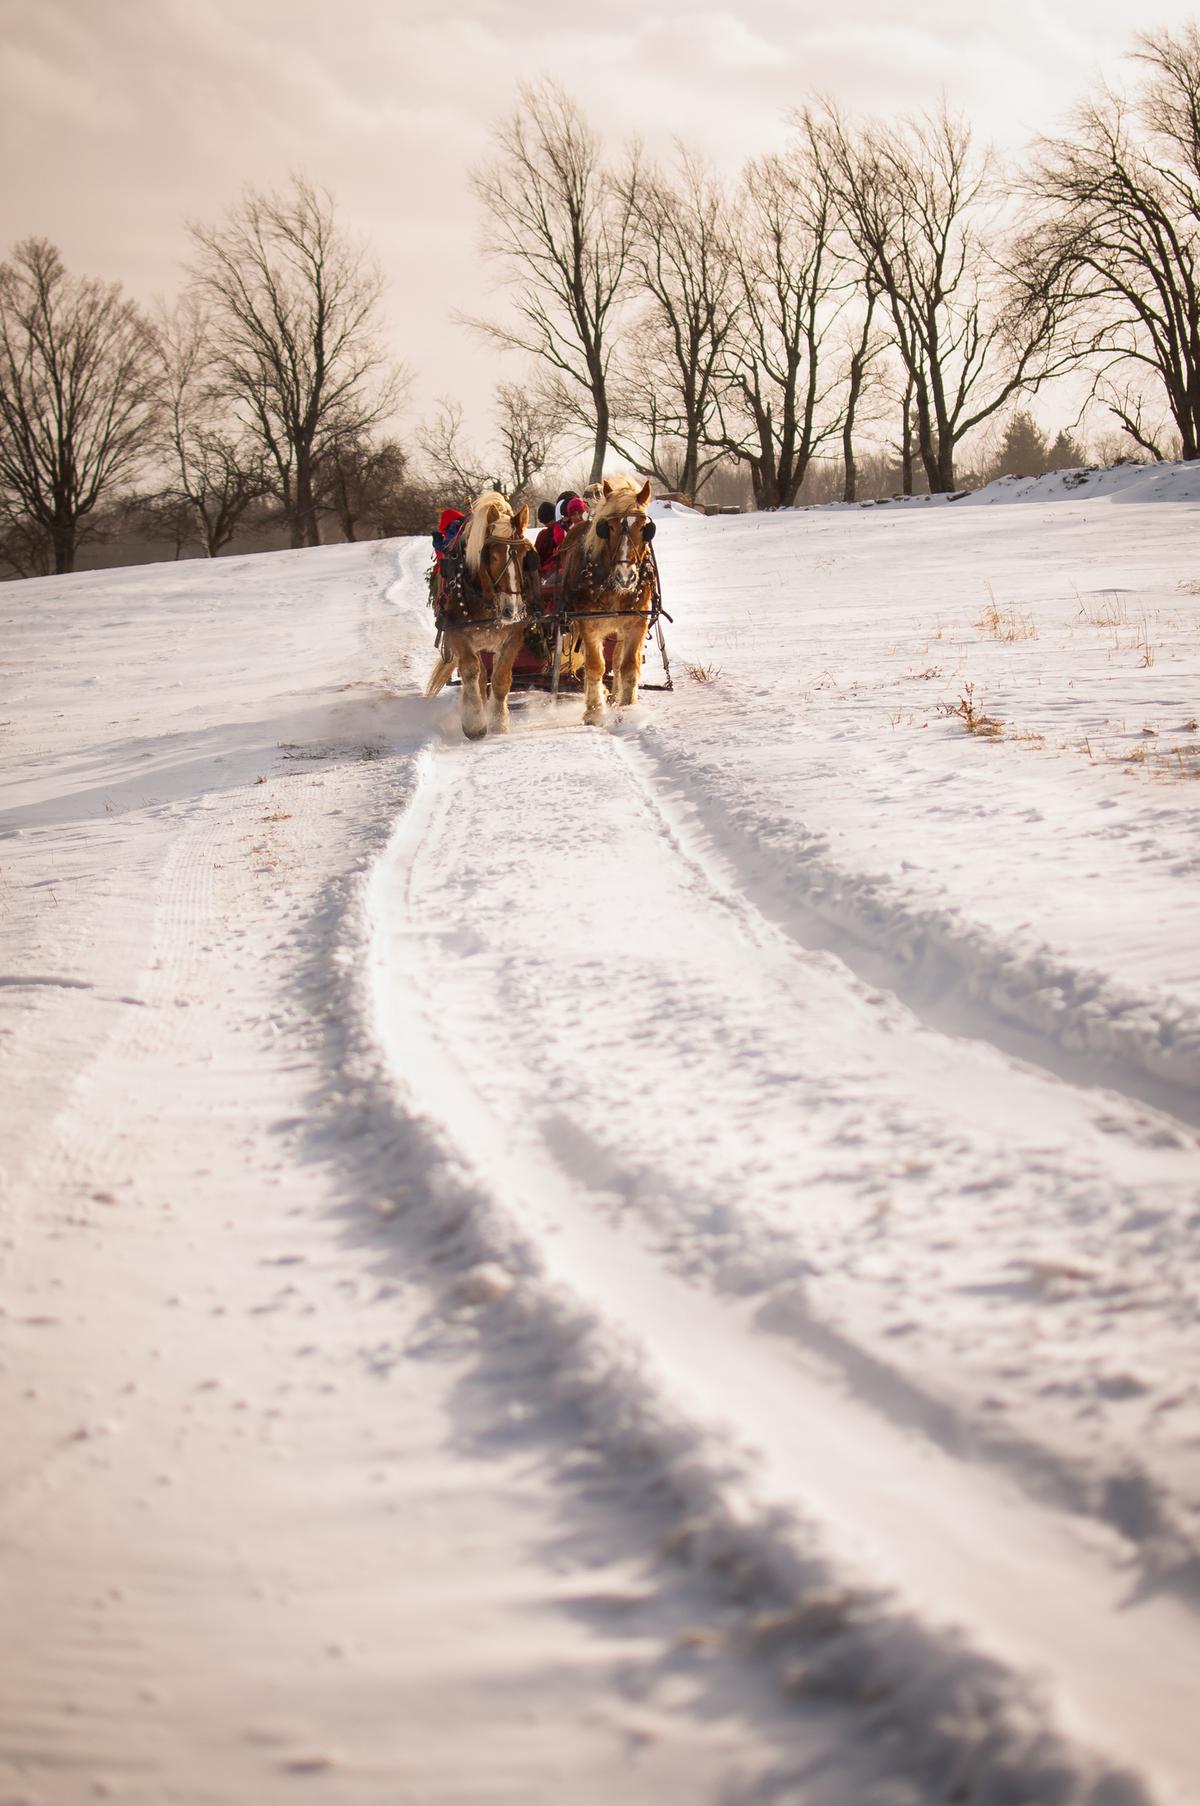 A sleigh ride in Stowe, Vermont. (Courtesy of Mark Vandenberg)